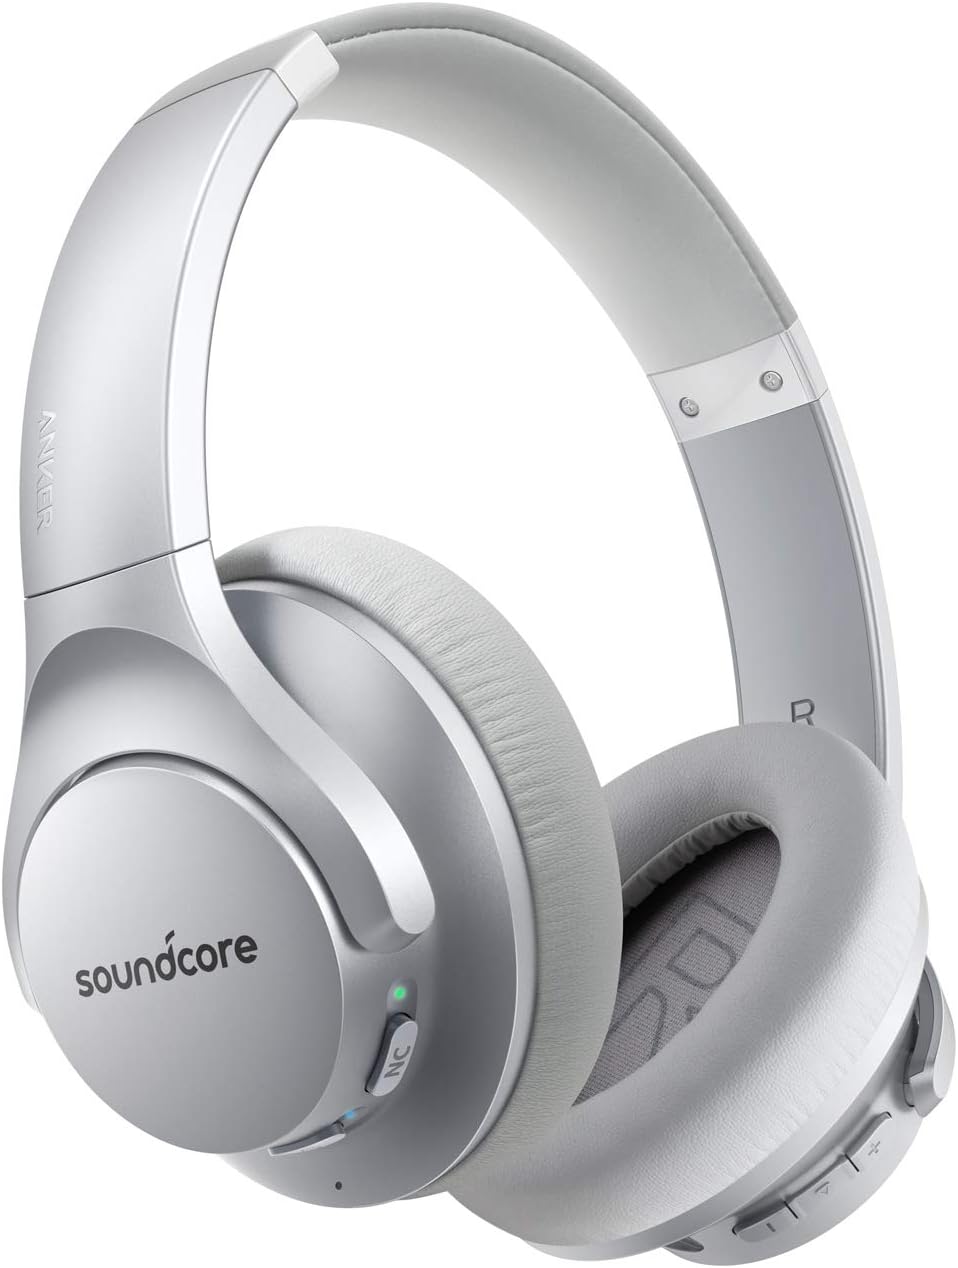 $43.99: [Lightning Deal] Anker Soundcore Life Q20 Hybrid Active Noise Cancelling Wireless Headphones